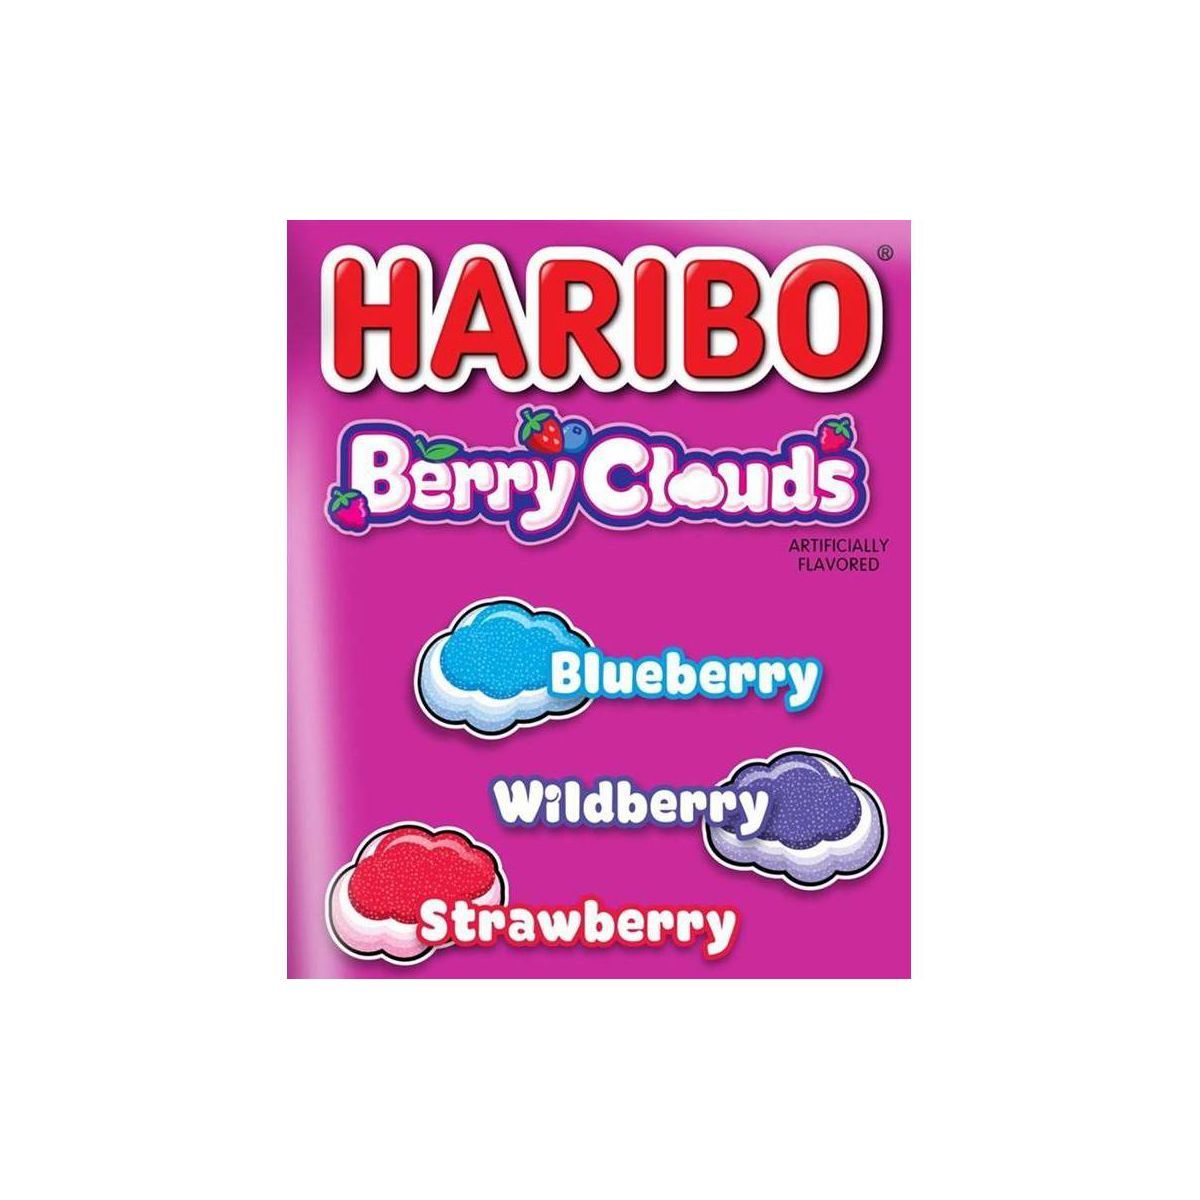 Haribo Berry Clouds - 7.5oz | Target